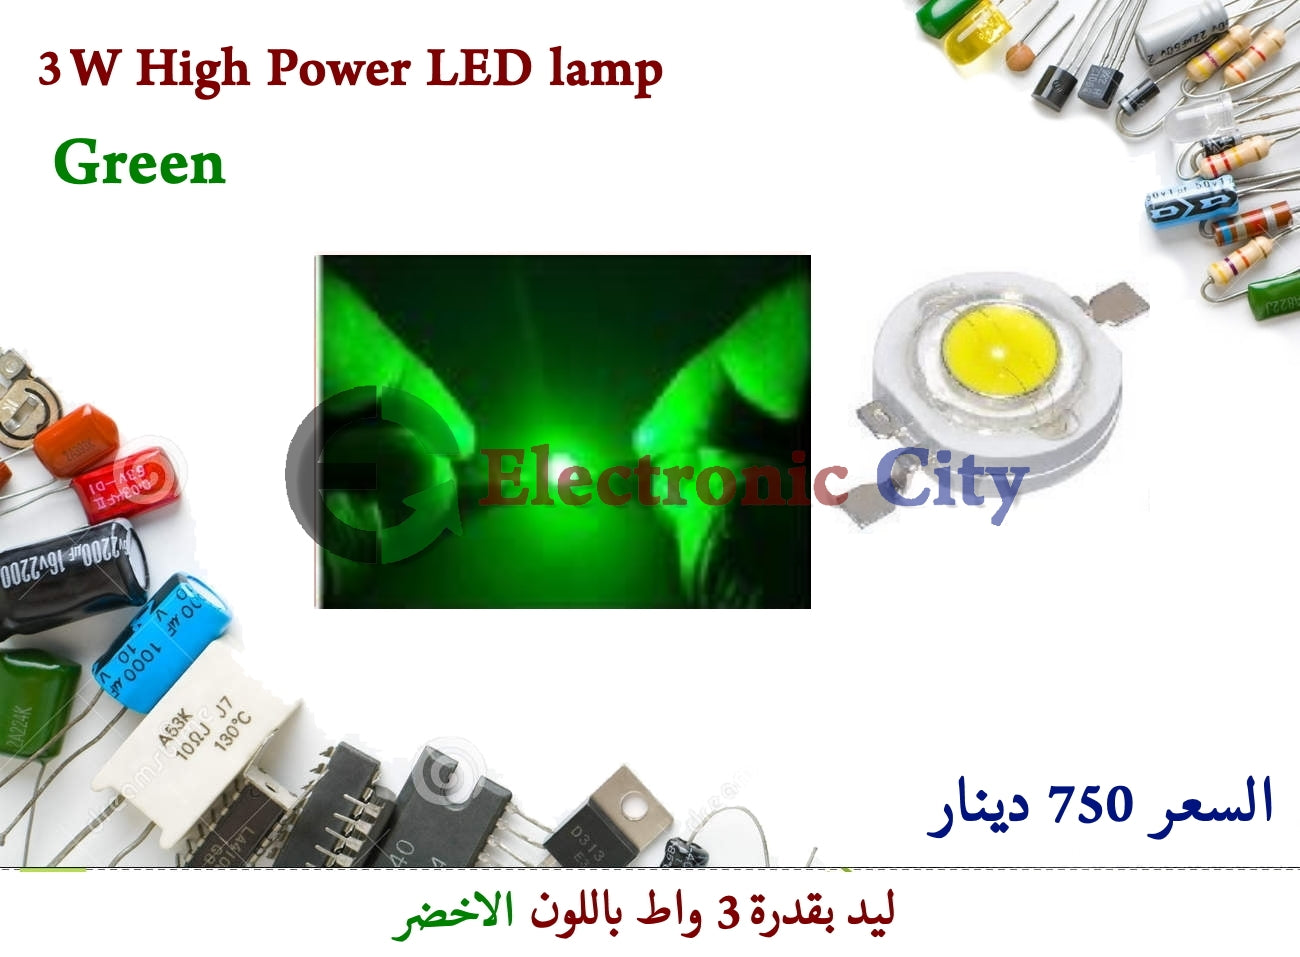 3W High Power LED lamp Green